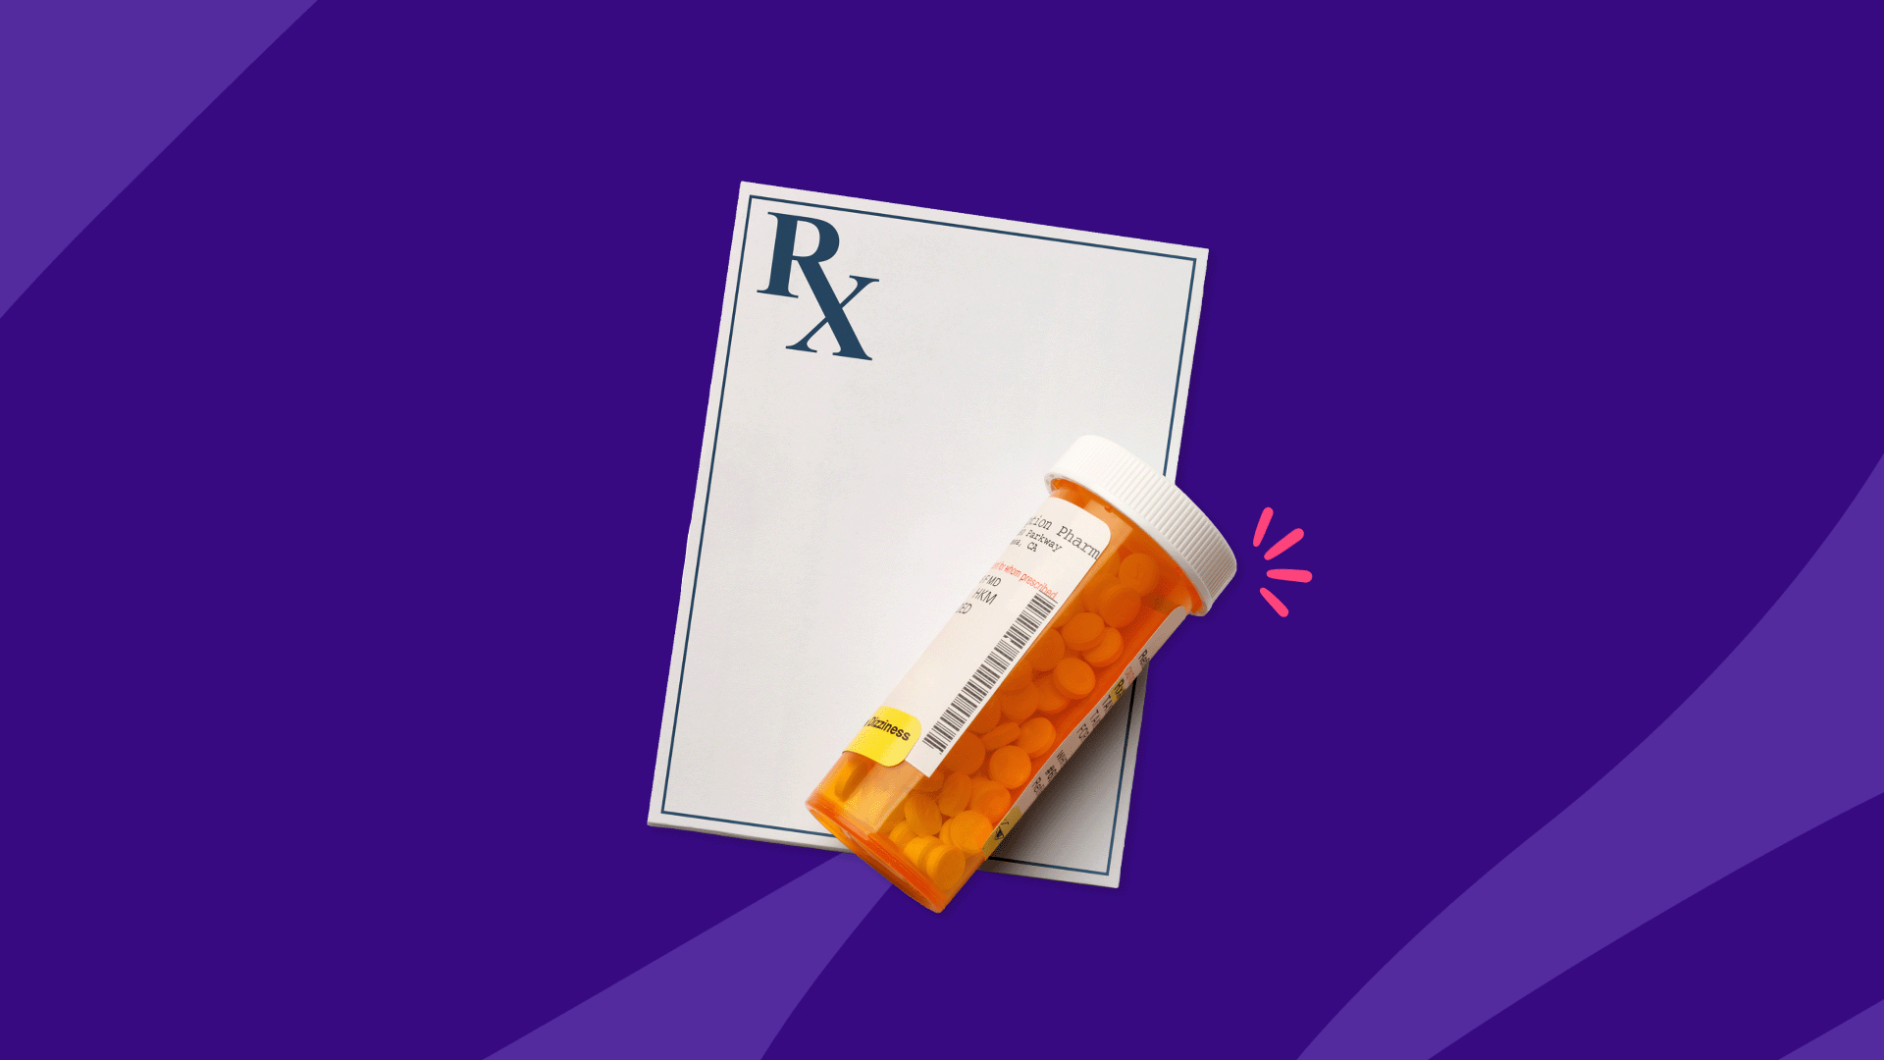 Rx prescription pad and Rx pill bottle: Rosuvastatin interactions